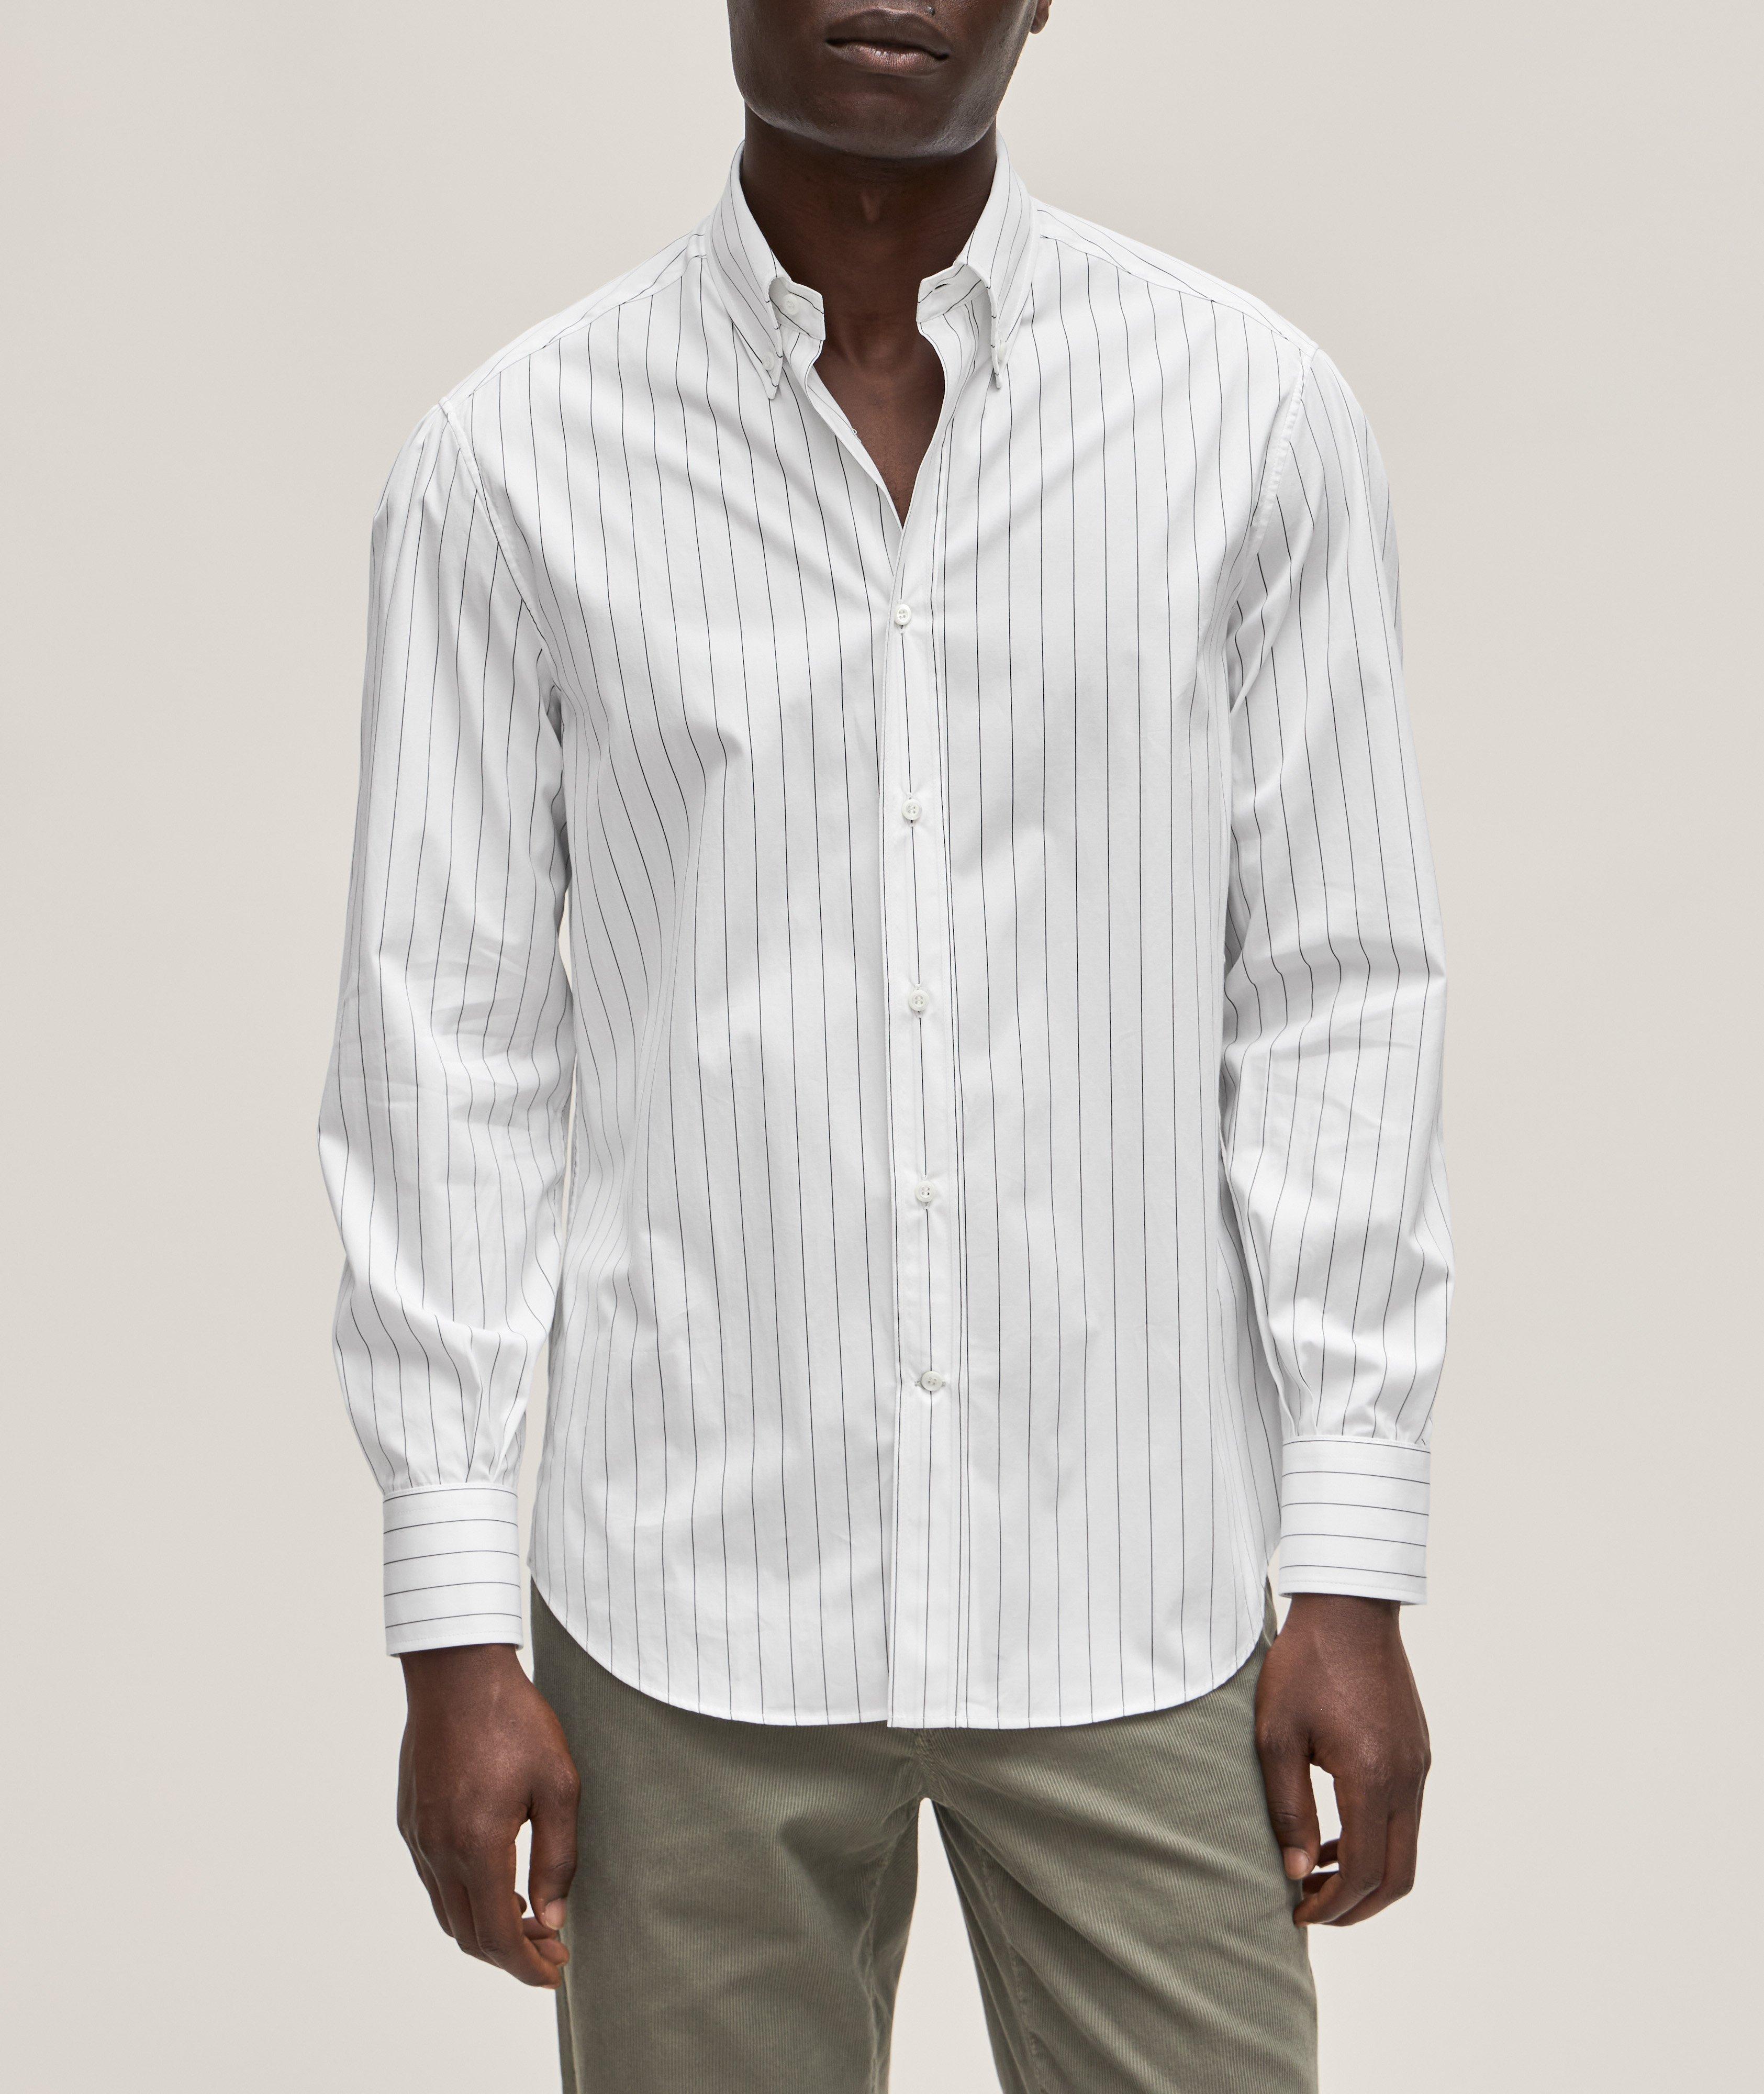 Basic Fit Striped Oxford Cotton Sport Shirt  image 1